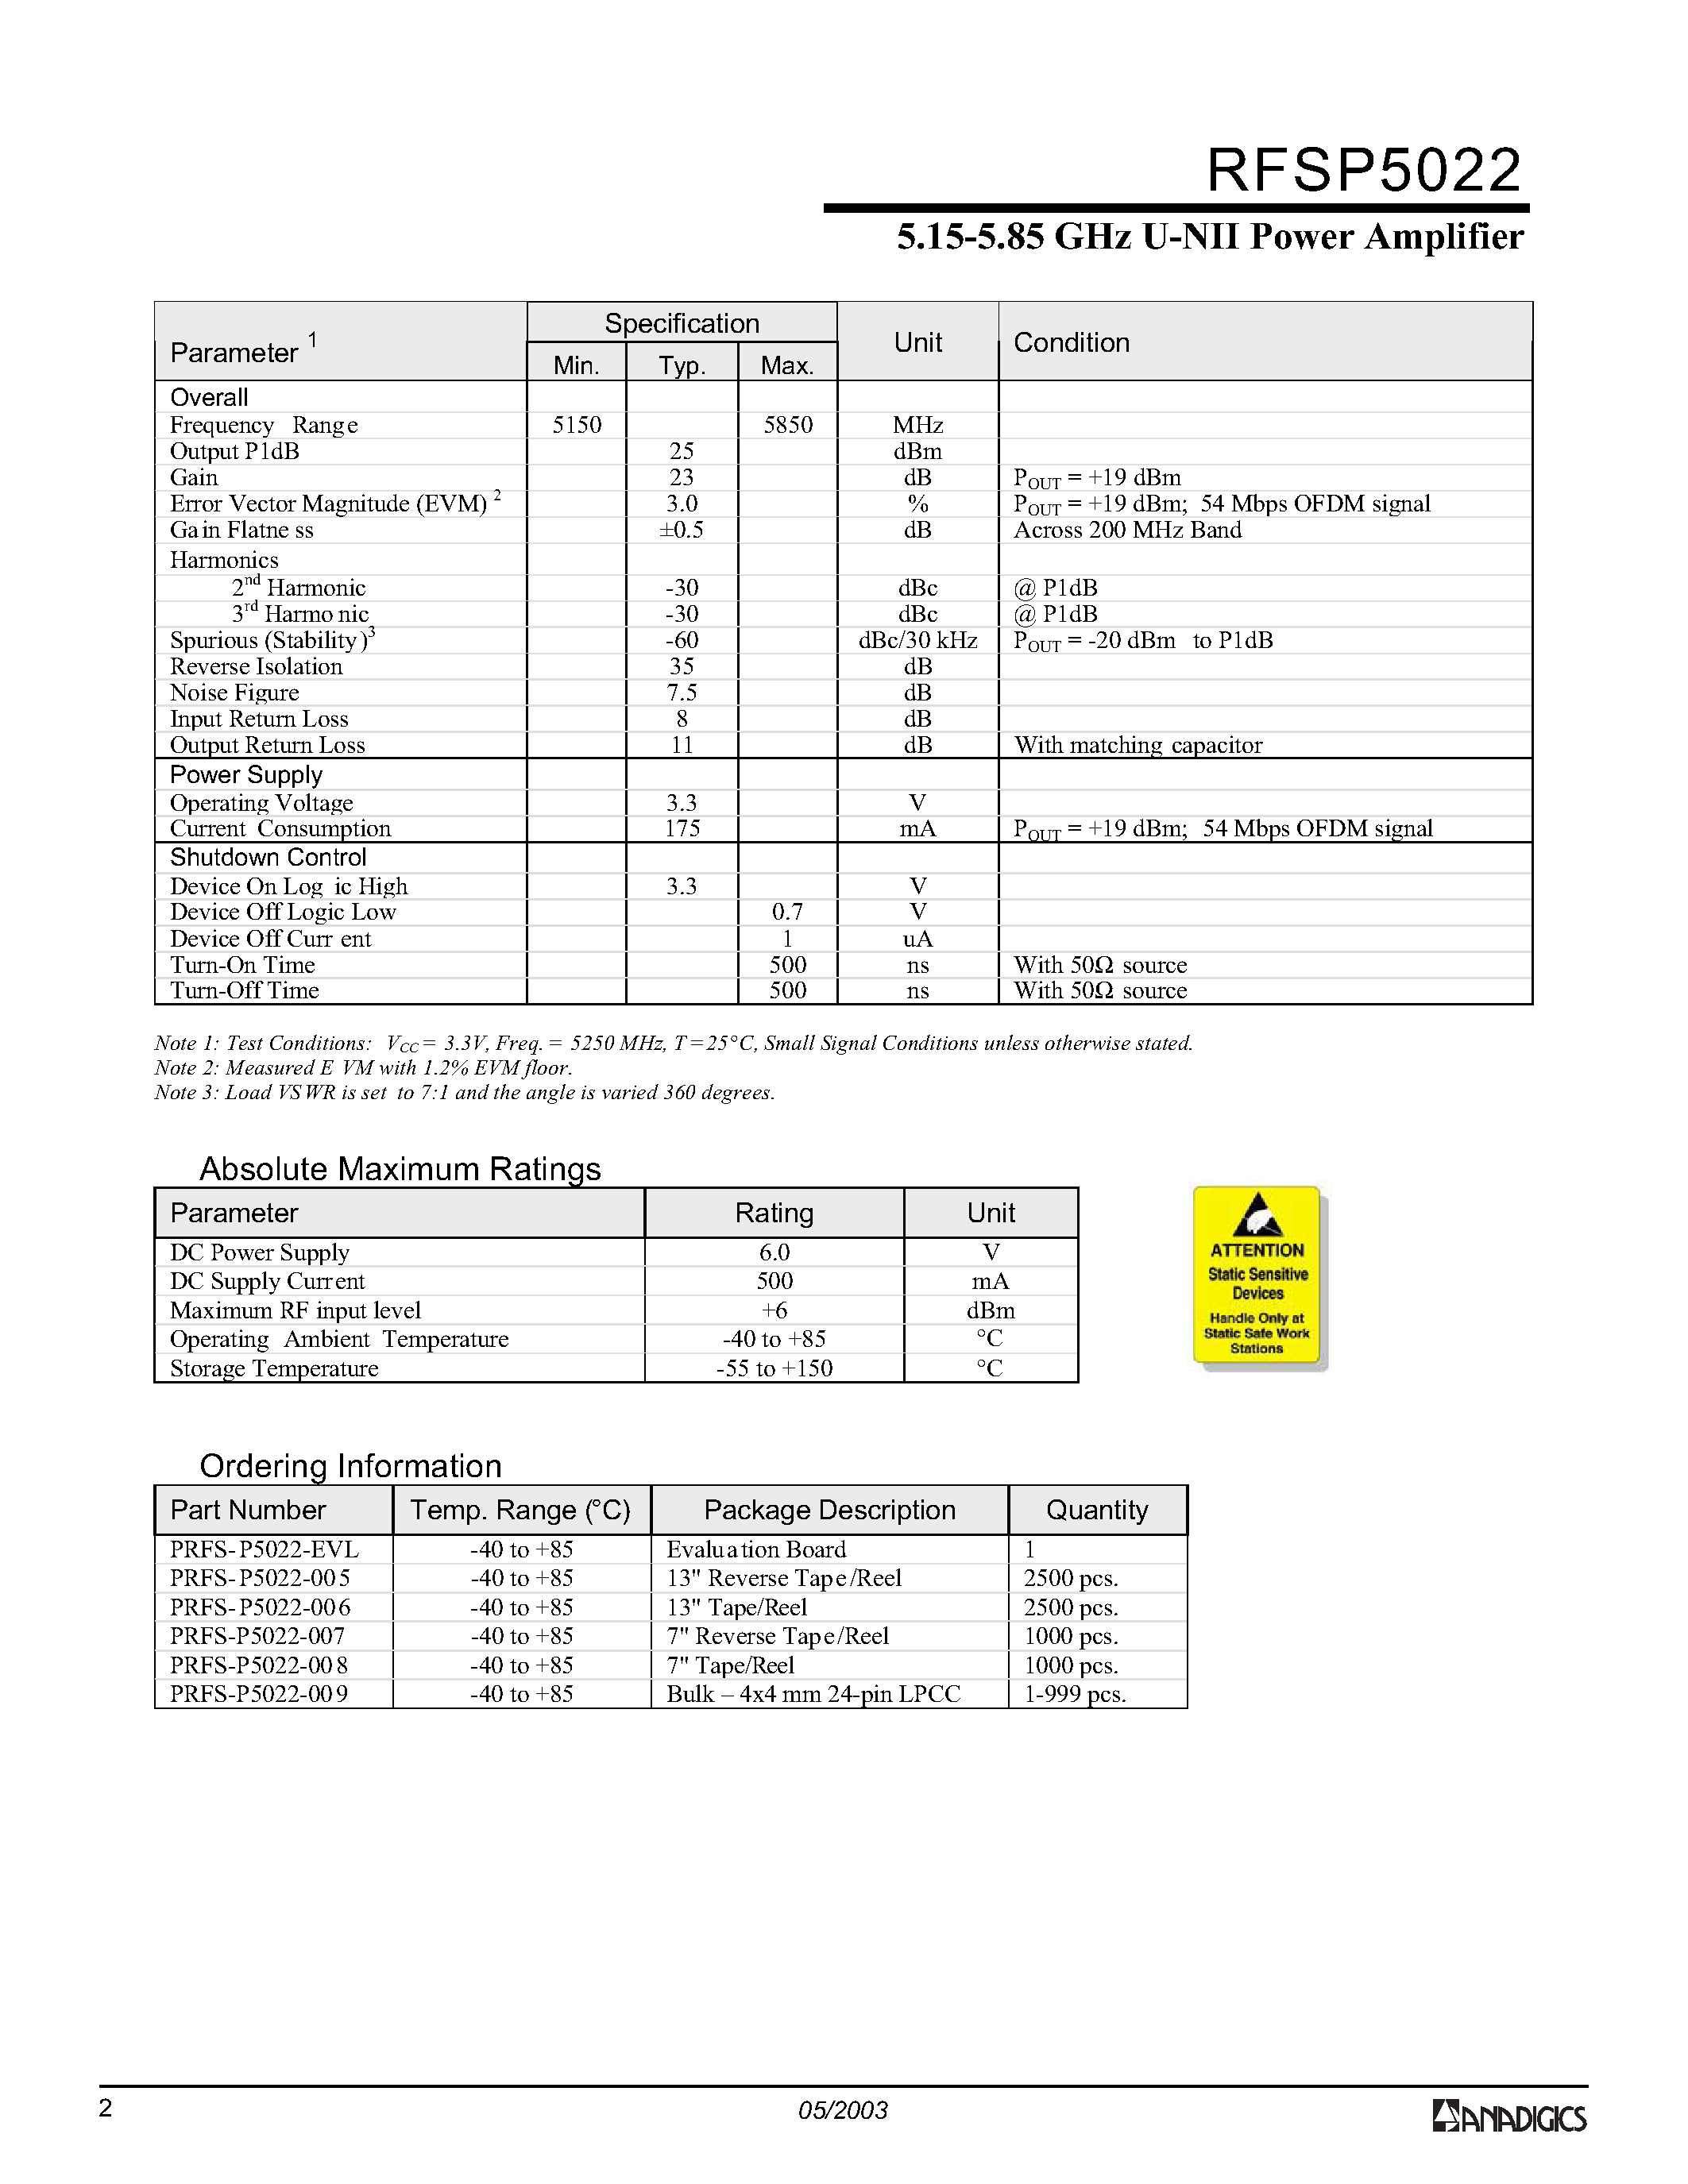 Datasheet PRFS-P5022-EVL - 5.15-5.85 GHz U-NII Power Amplifier page 2